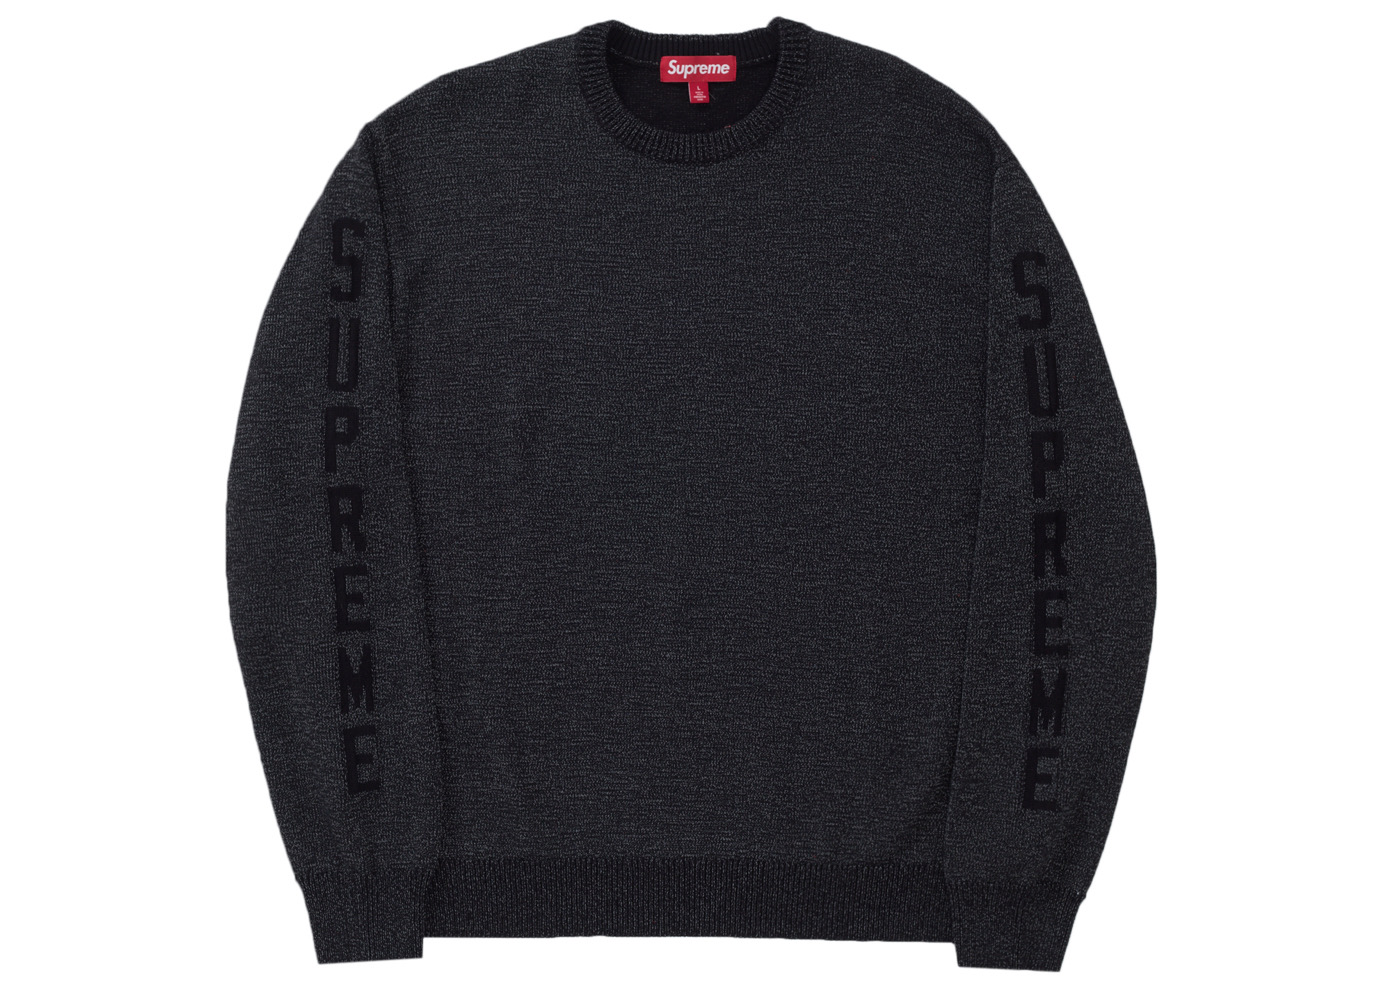 Supreme Repeat Sweater Black Men's - FW17 - US